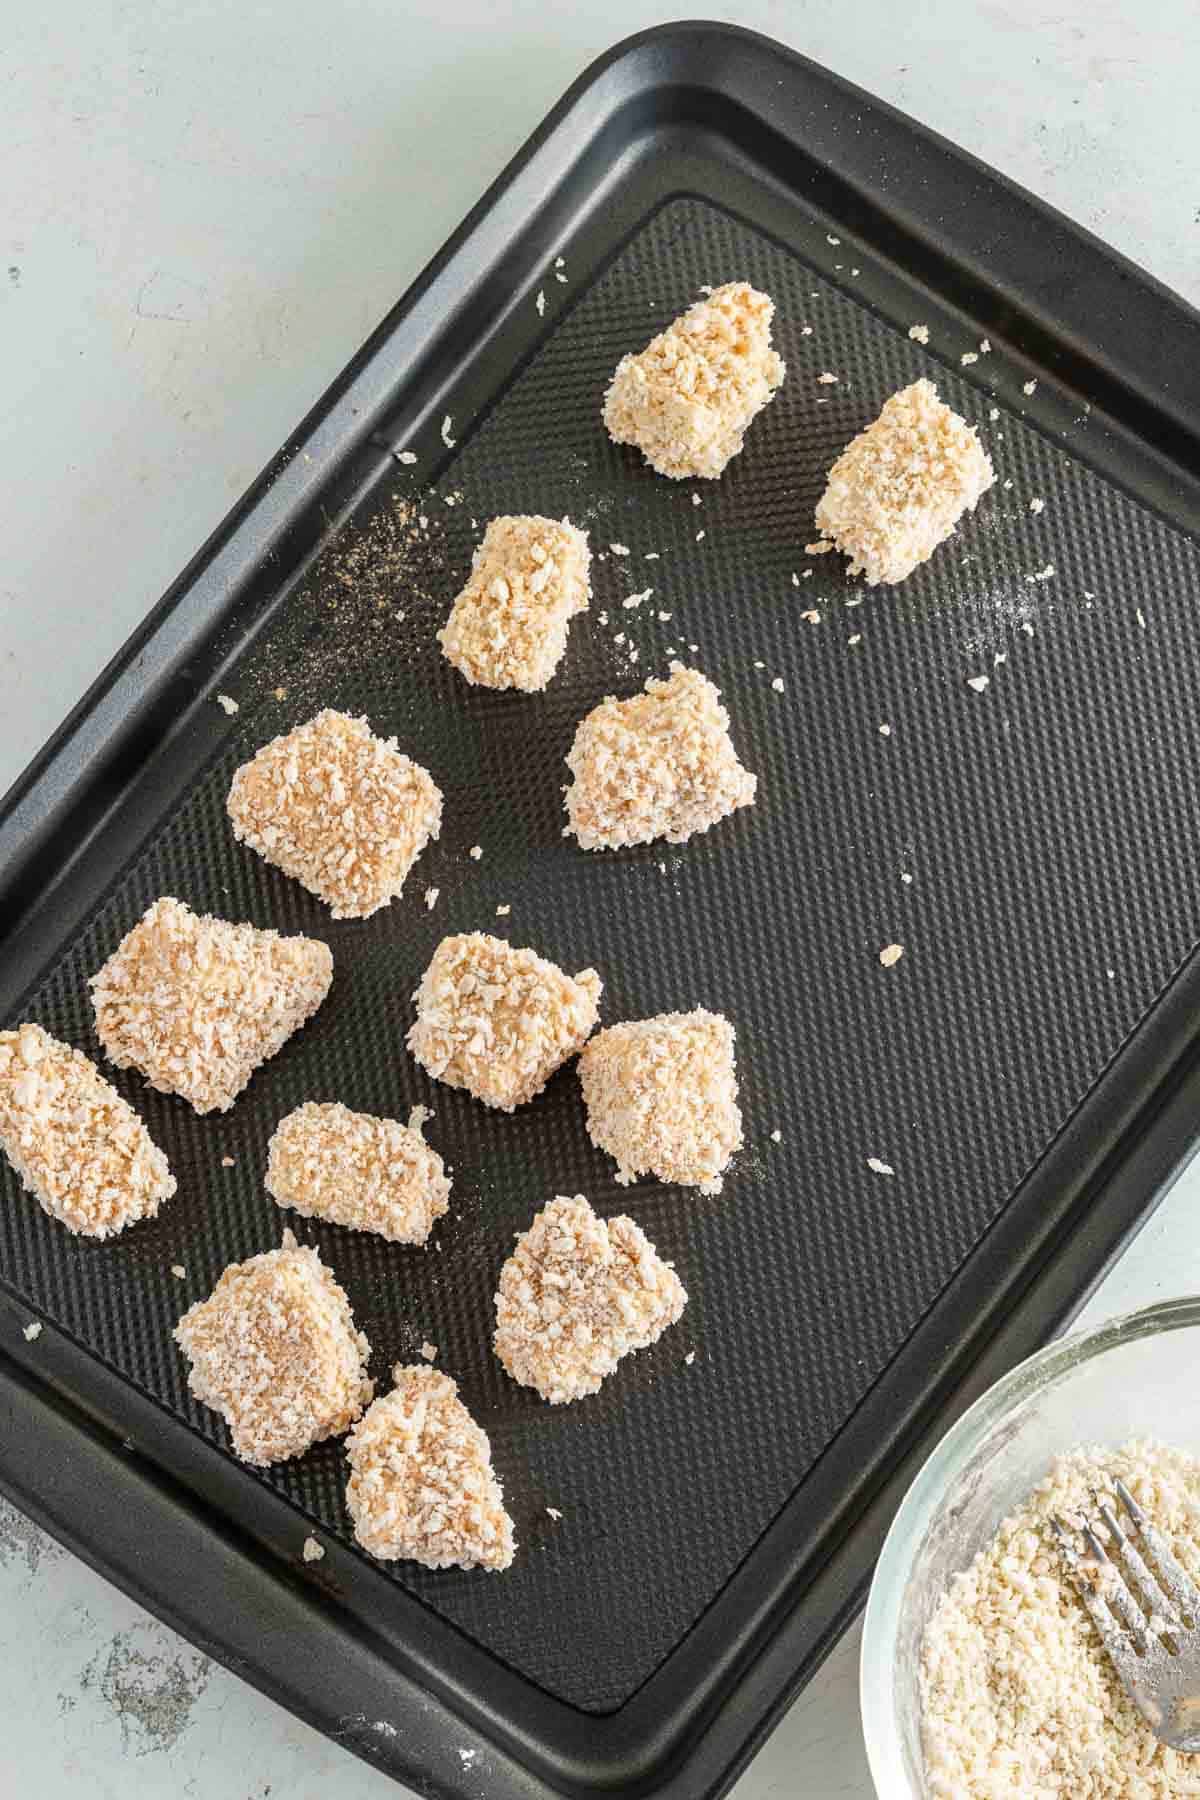 Tofu nuggets dipped in panko breadcrumbs on a baking pan.